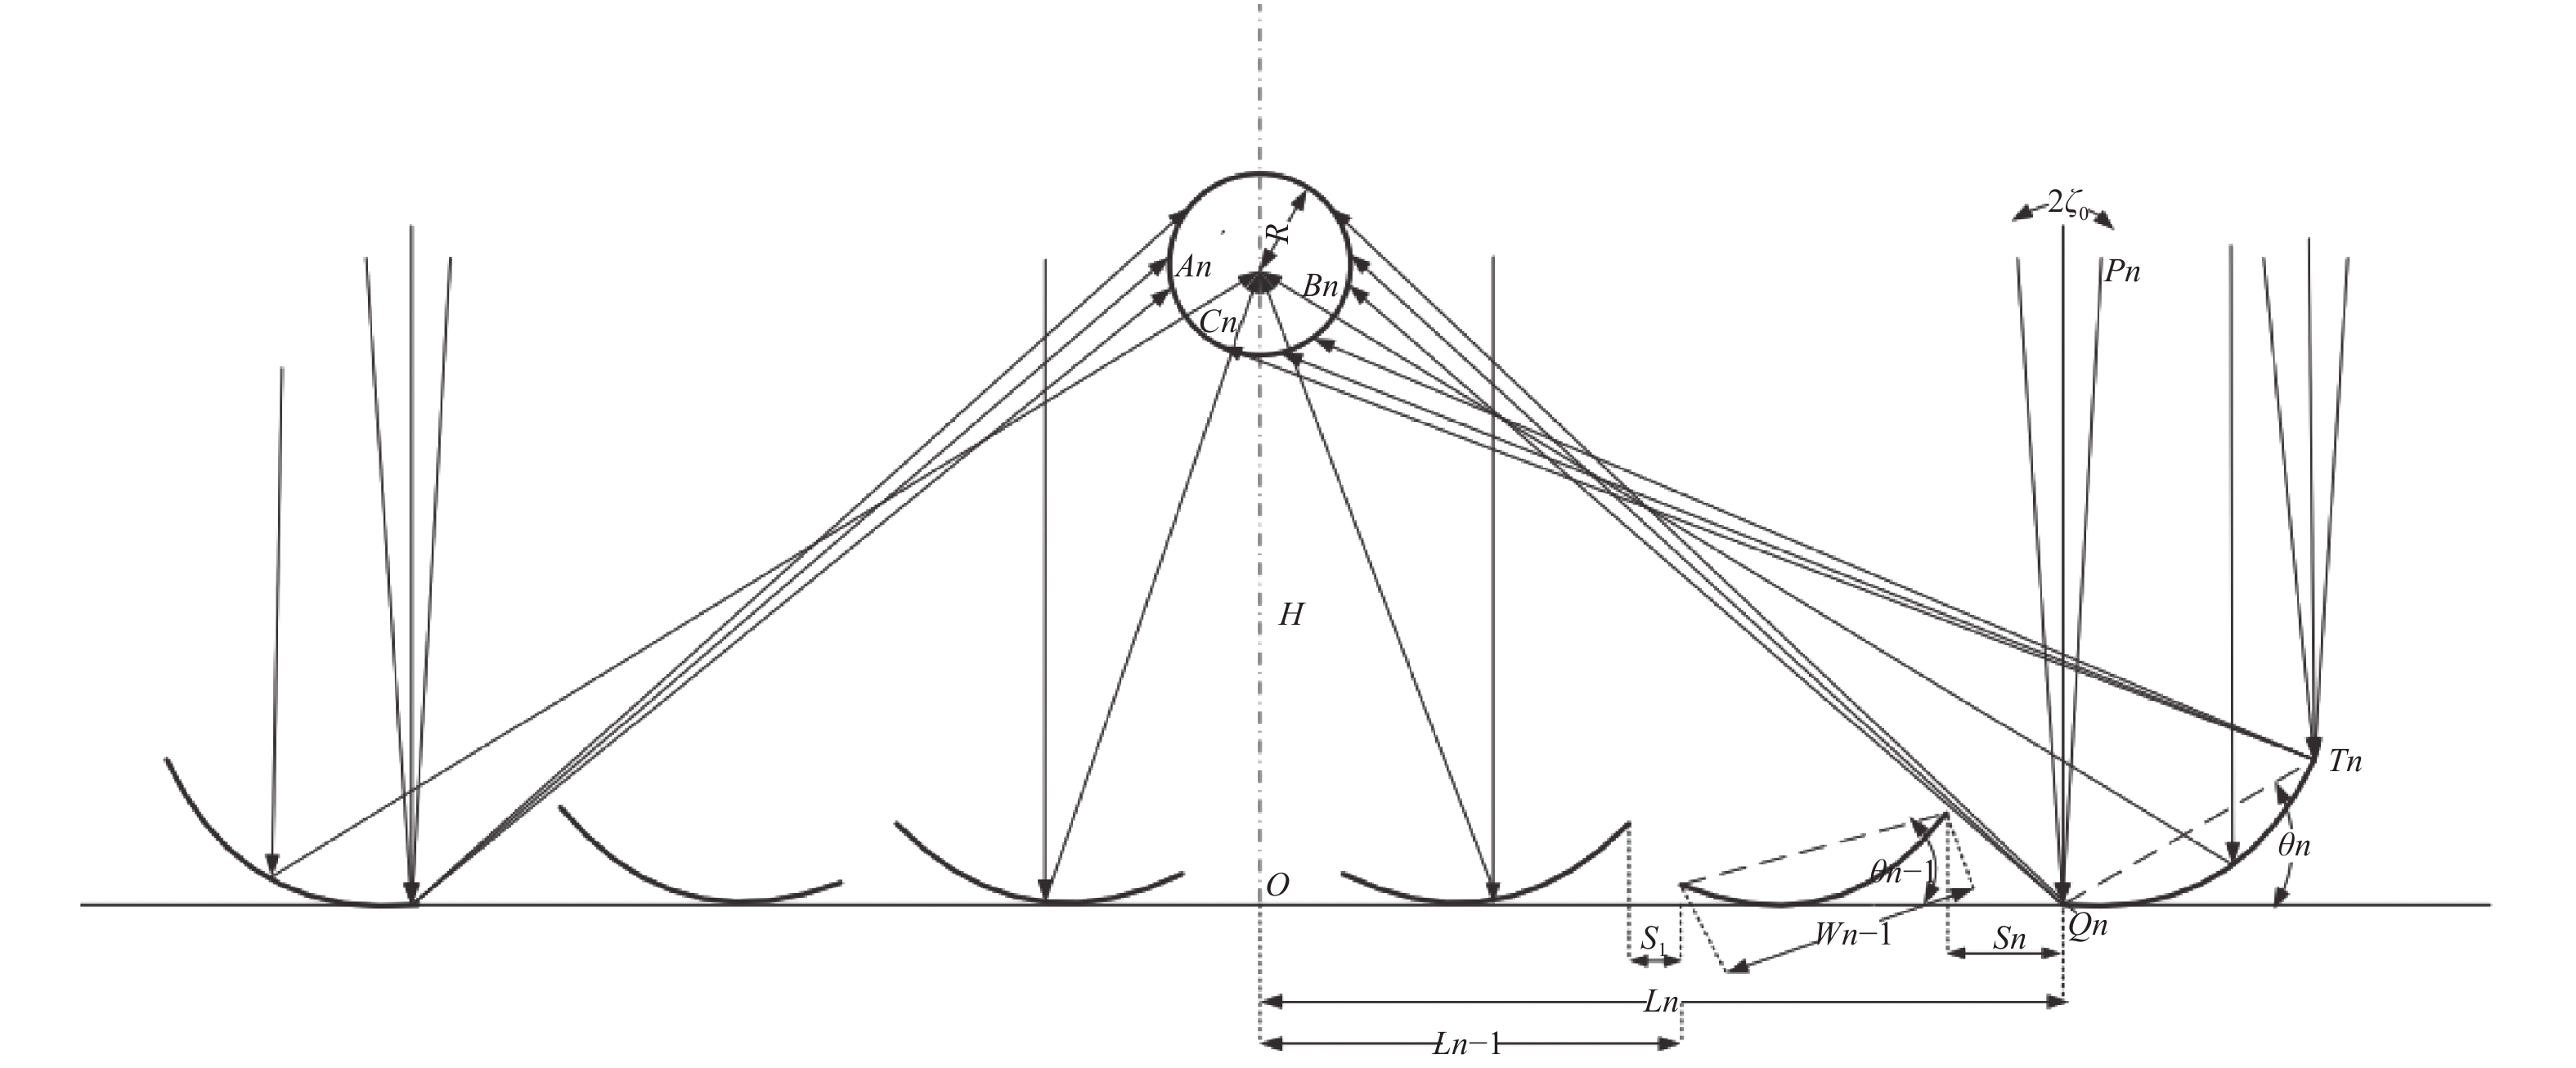 Schematic diagram of LFR with parabolic reflectors[24]